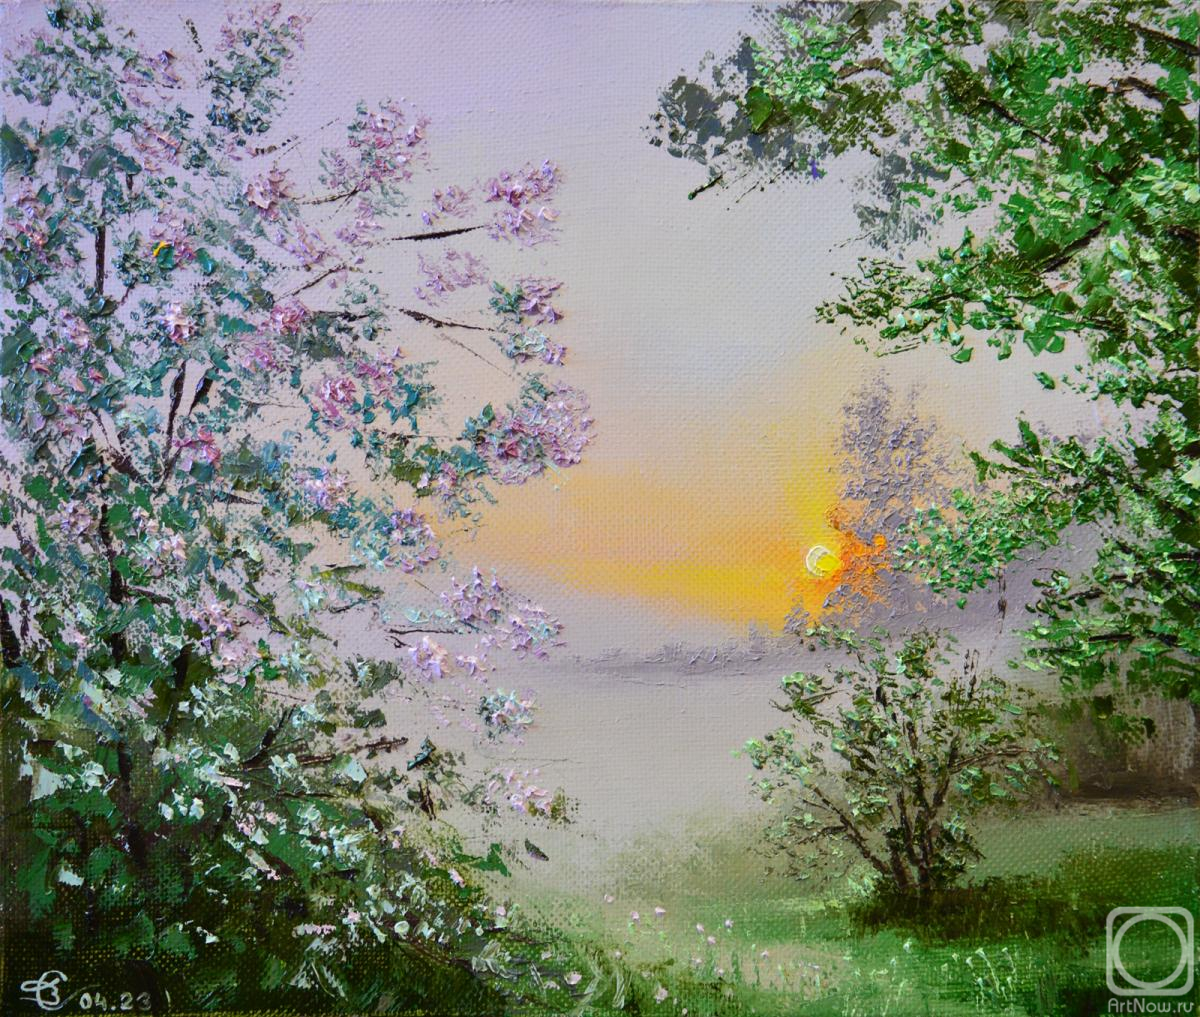 Stolyarov Vadim. Blooming sunset